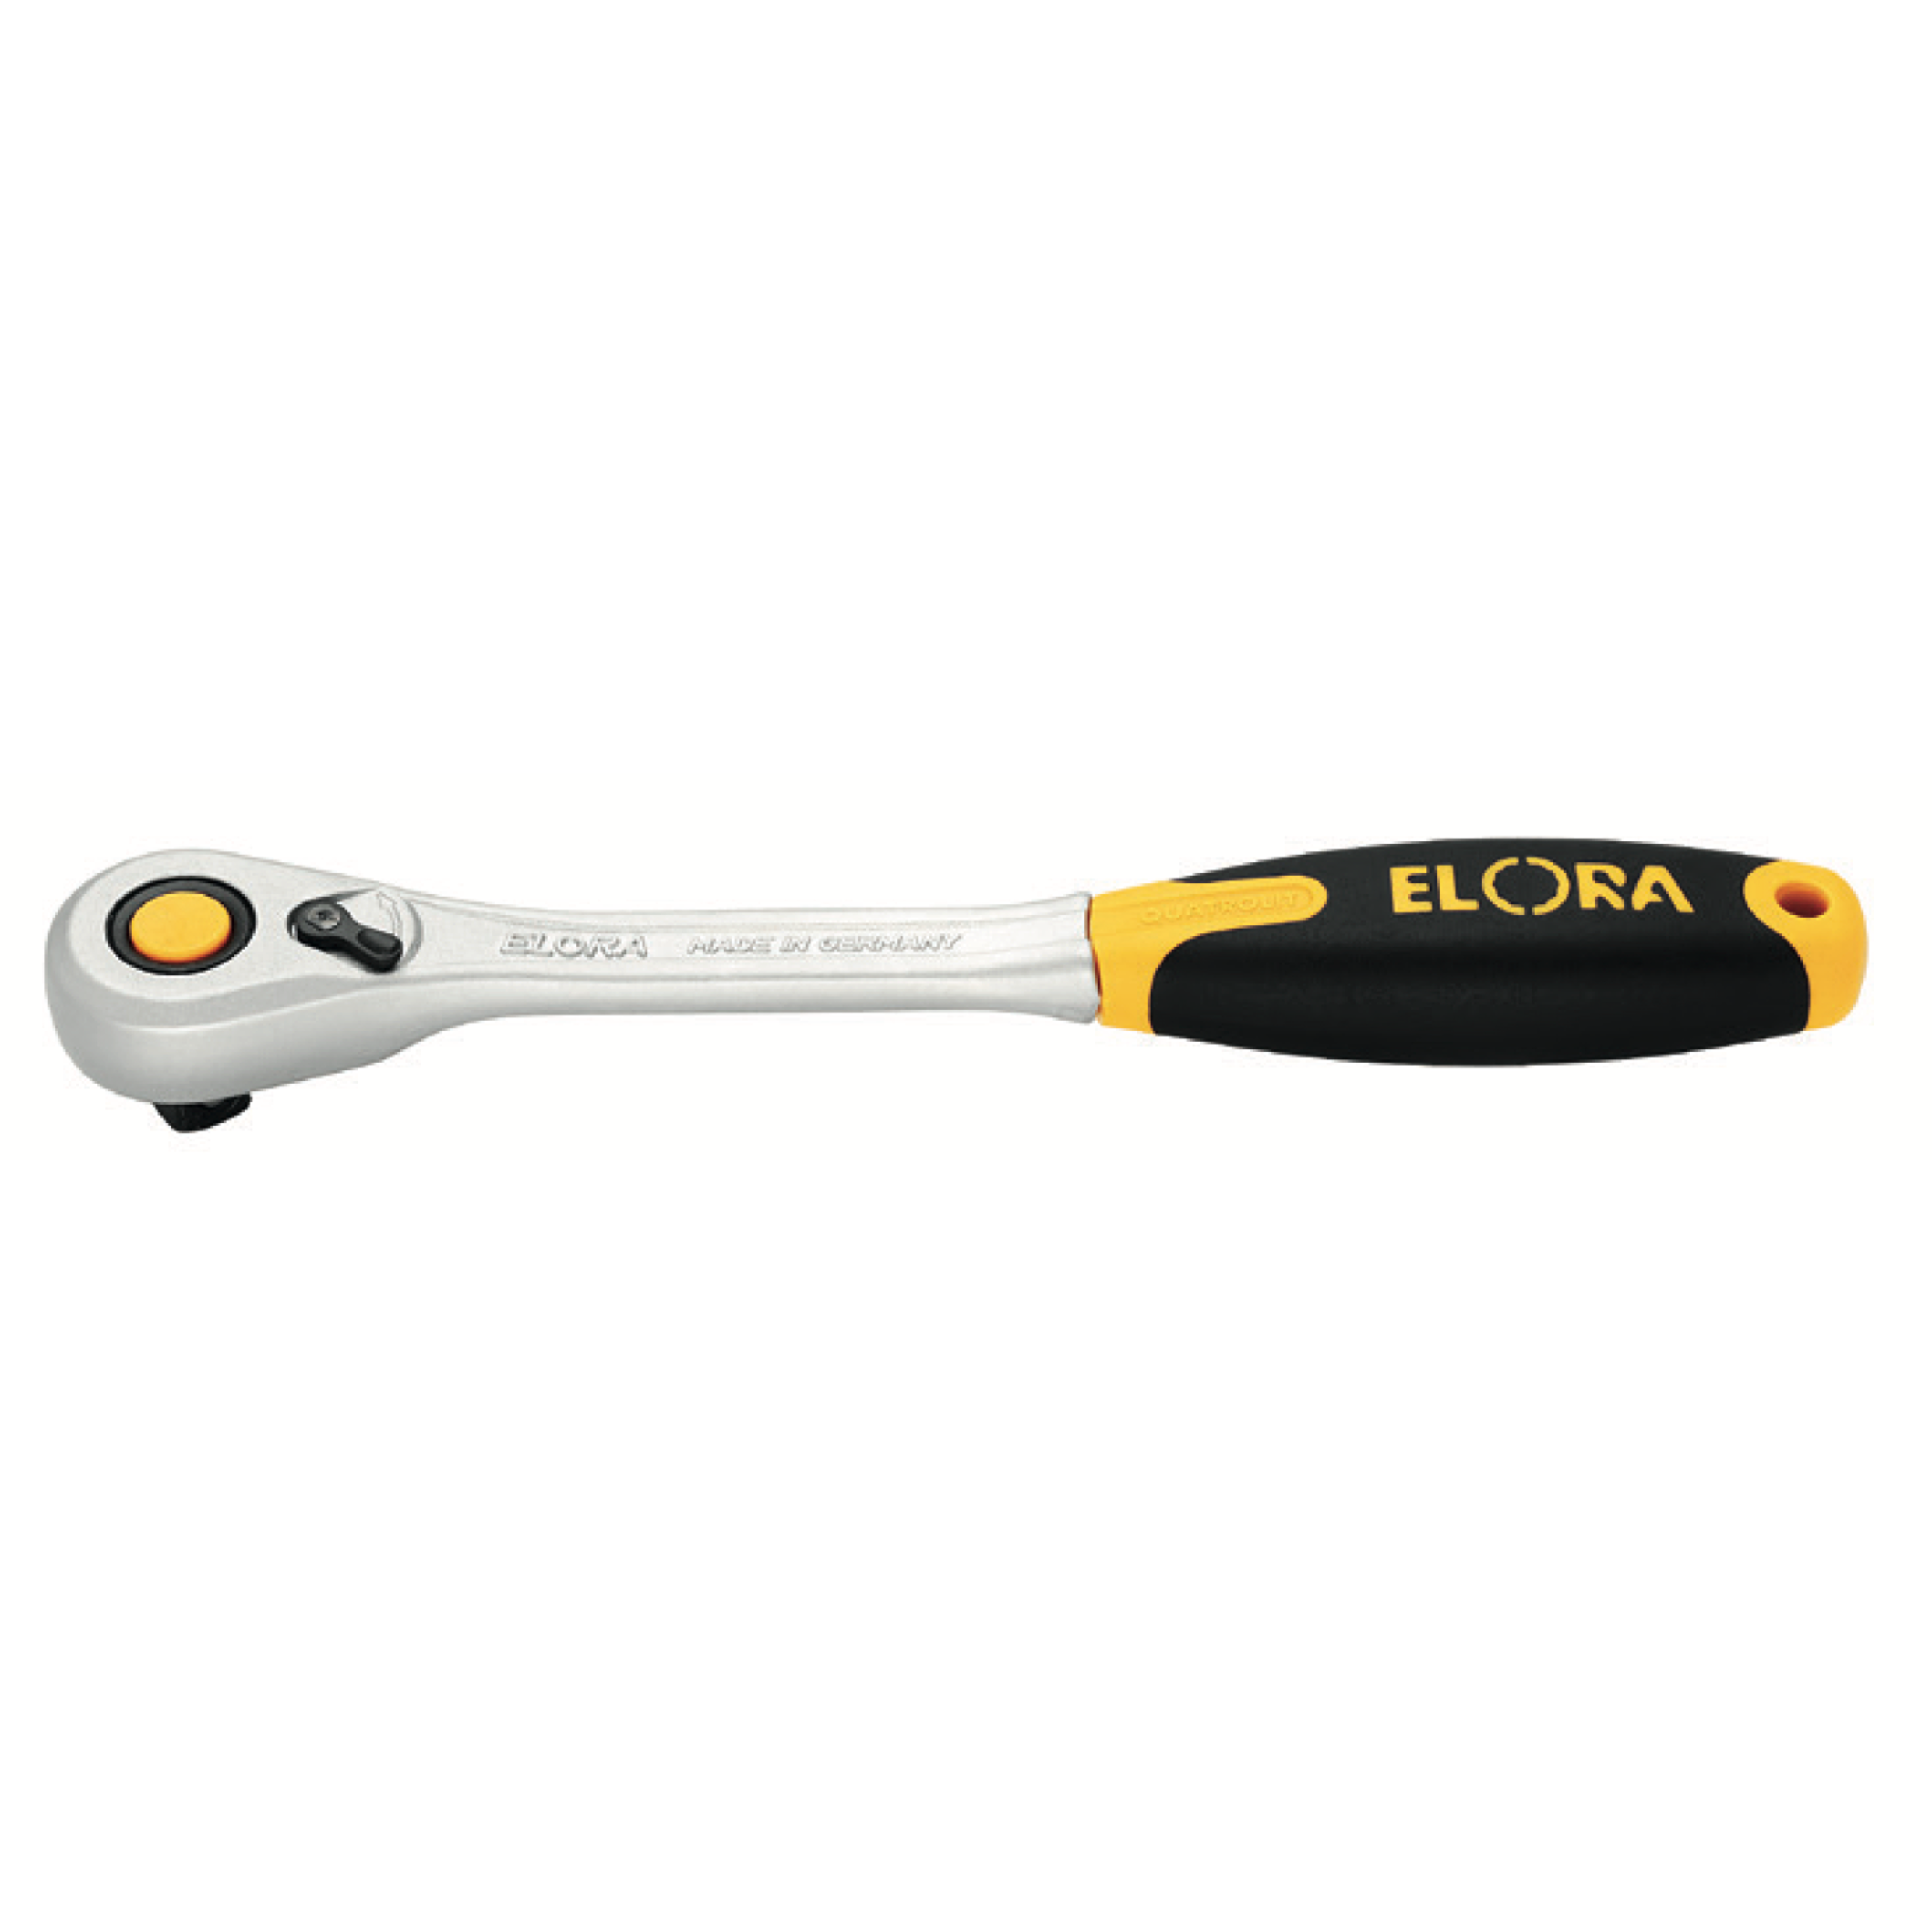 ELORA 770-LE1F Repair Kit Reversible Ratchet 1/2" (ELORA Tools) - Premium Reversible Ratchet from ELORA - Shop now at Yew Aik.